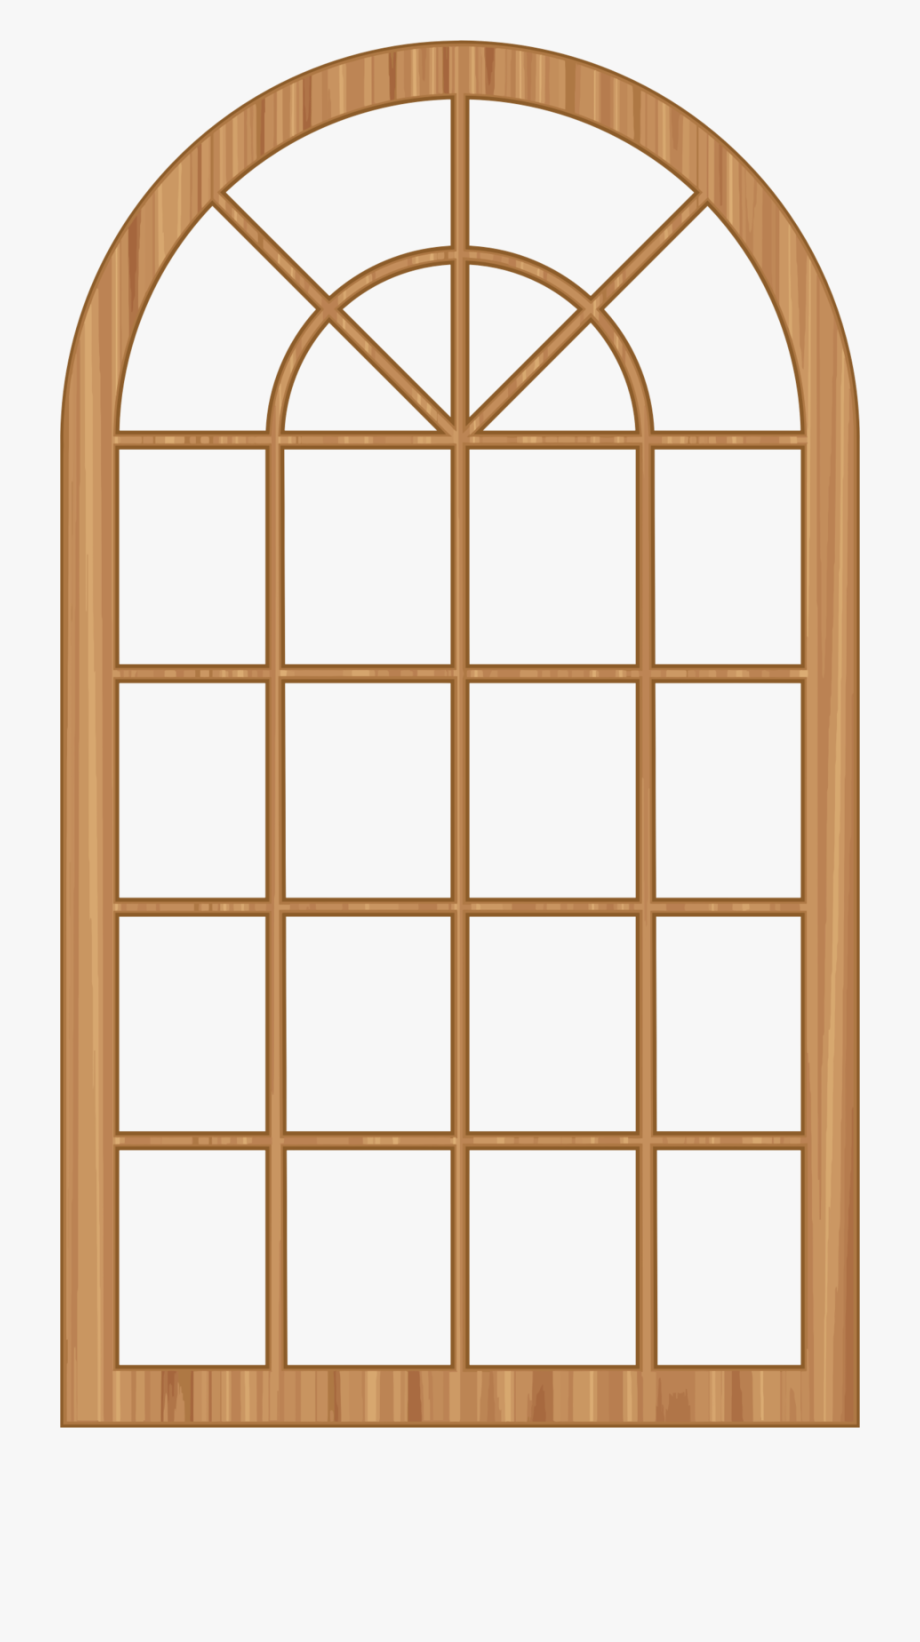 Wooden window frame.